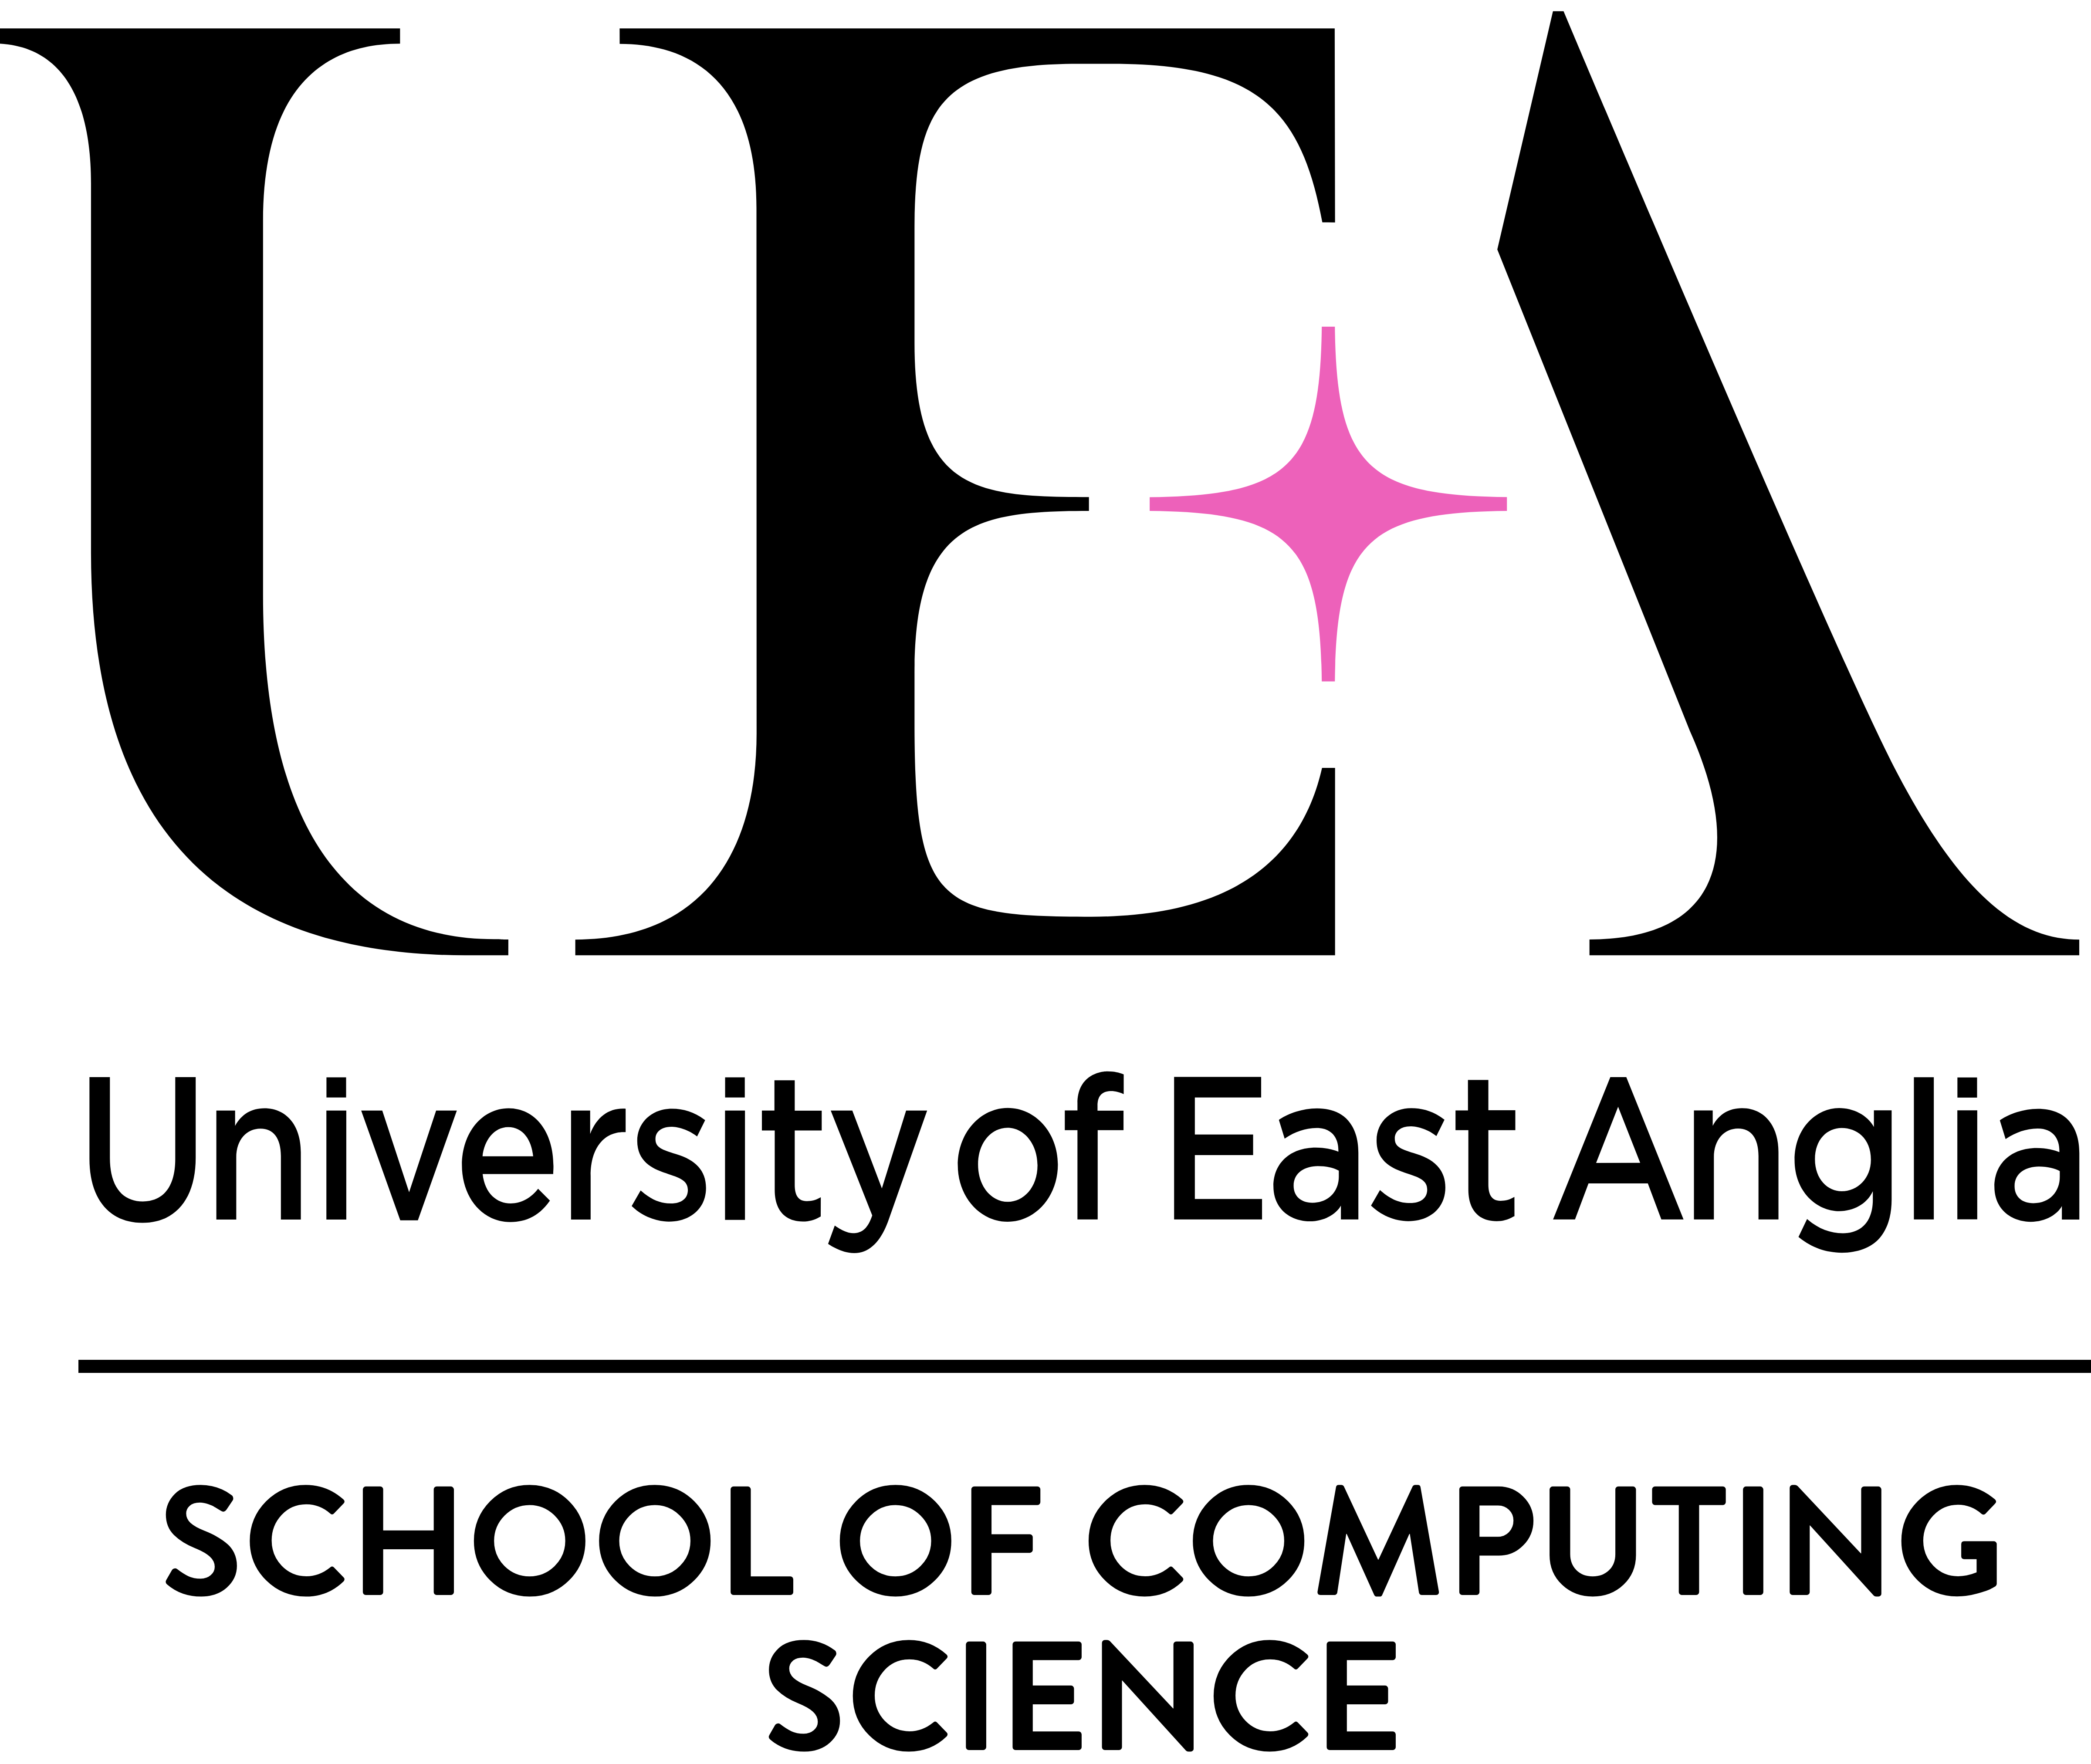 UEA logo, School of Computing Science